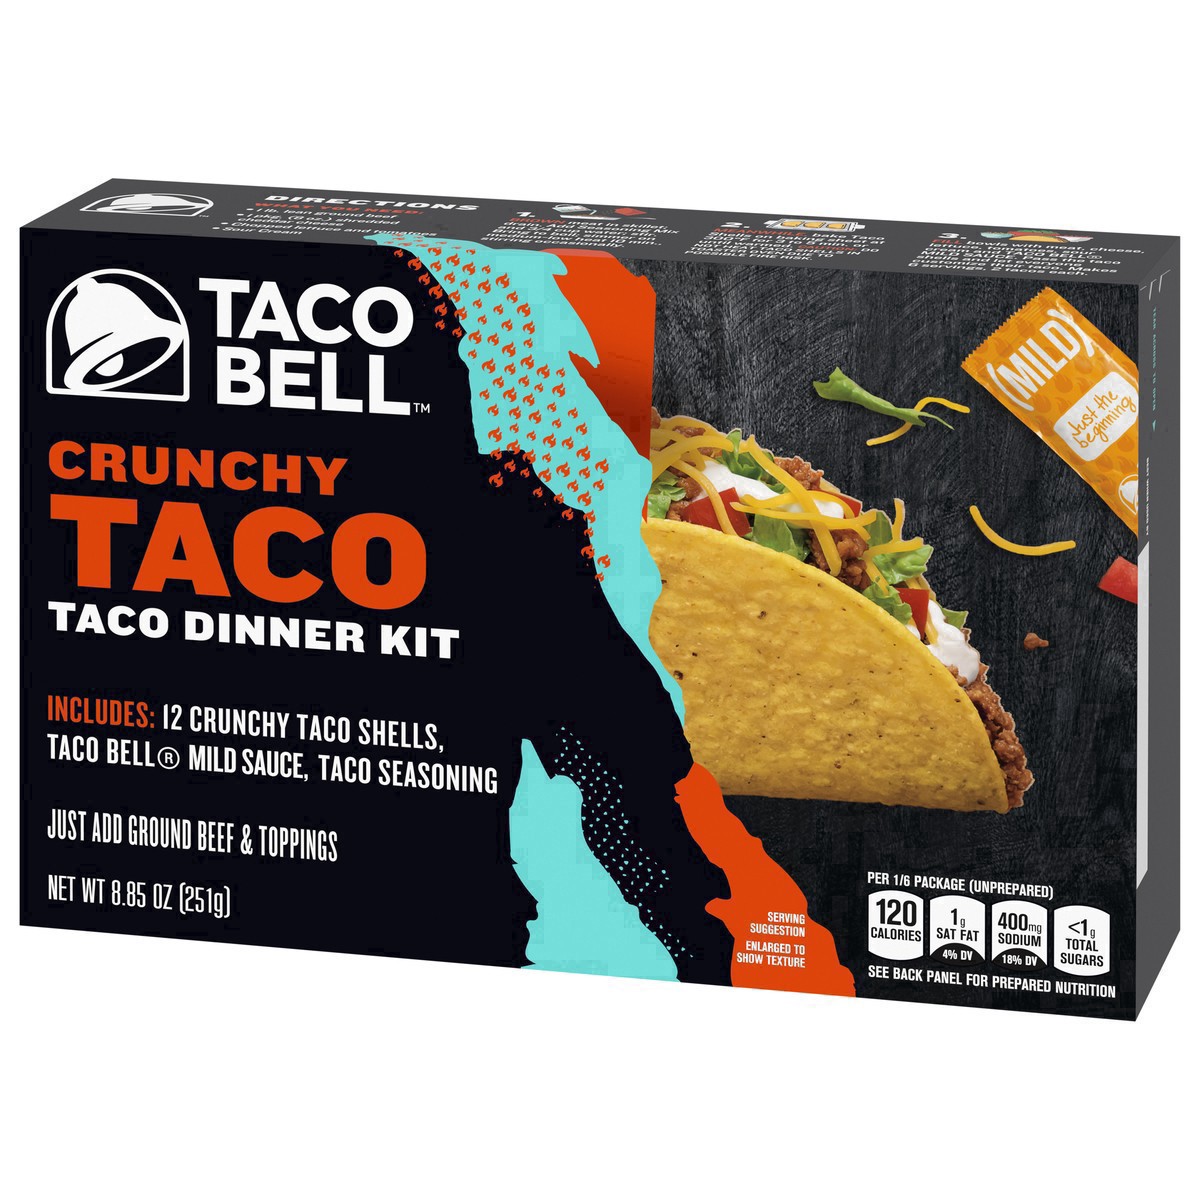 slide 73 of 91, Taco Bell Crunchy Taco Cravings Kit with 12 Crunchy Taco Shells, Taco Bell Mild Sauce & Seasoning, 8.85 oz Box, 1 ct